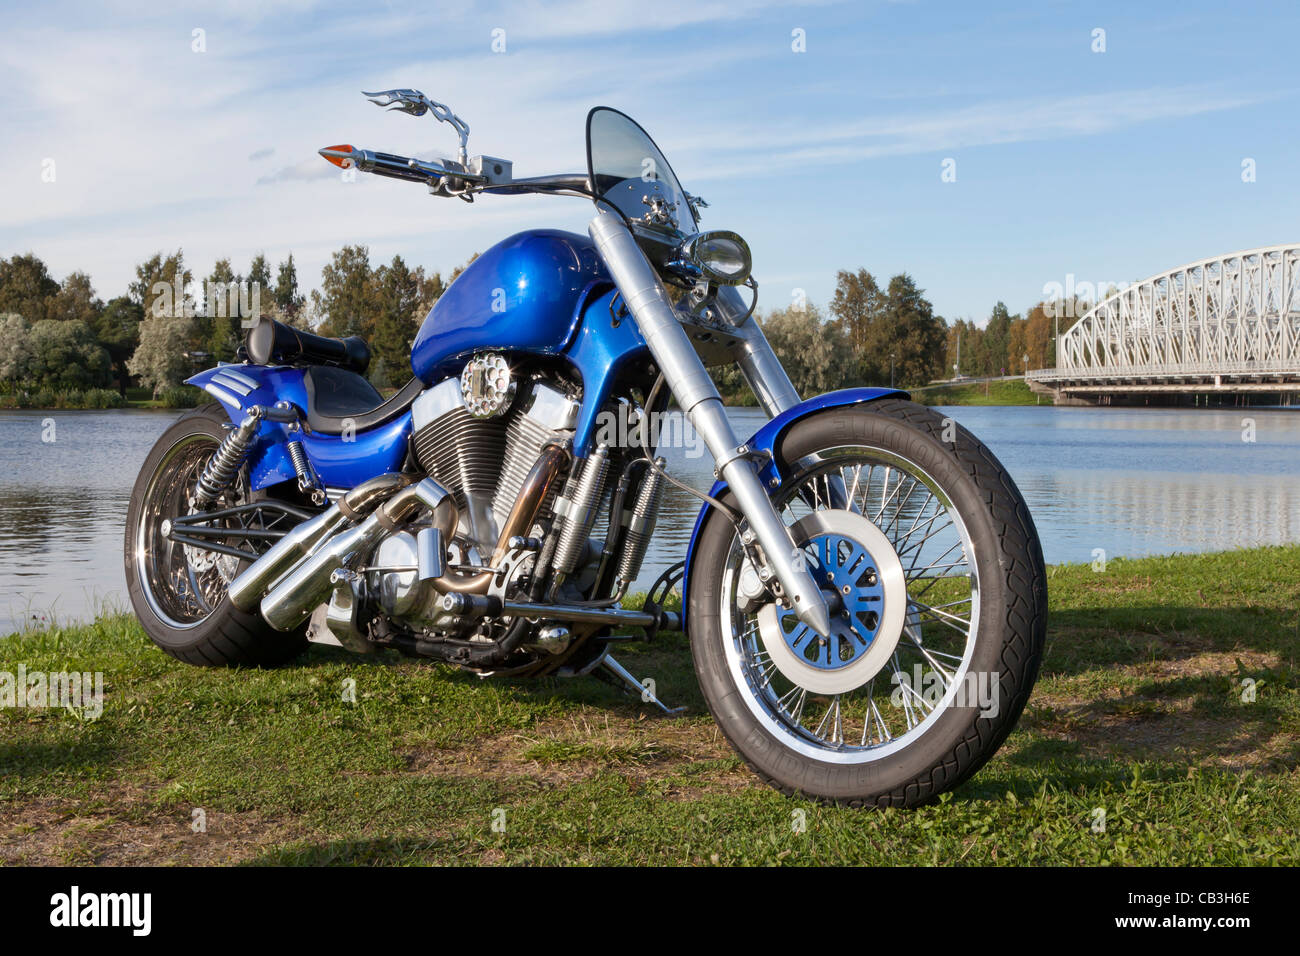 Suzuki Intruder motorcycle by the river in summer. Stock Photo